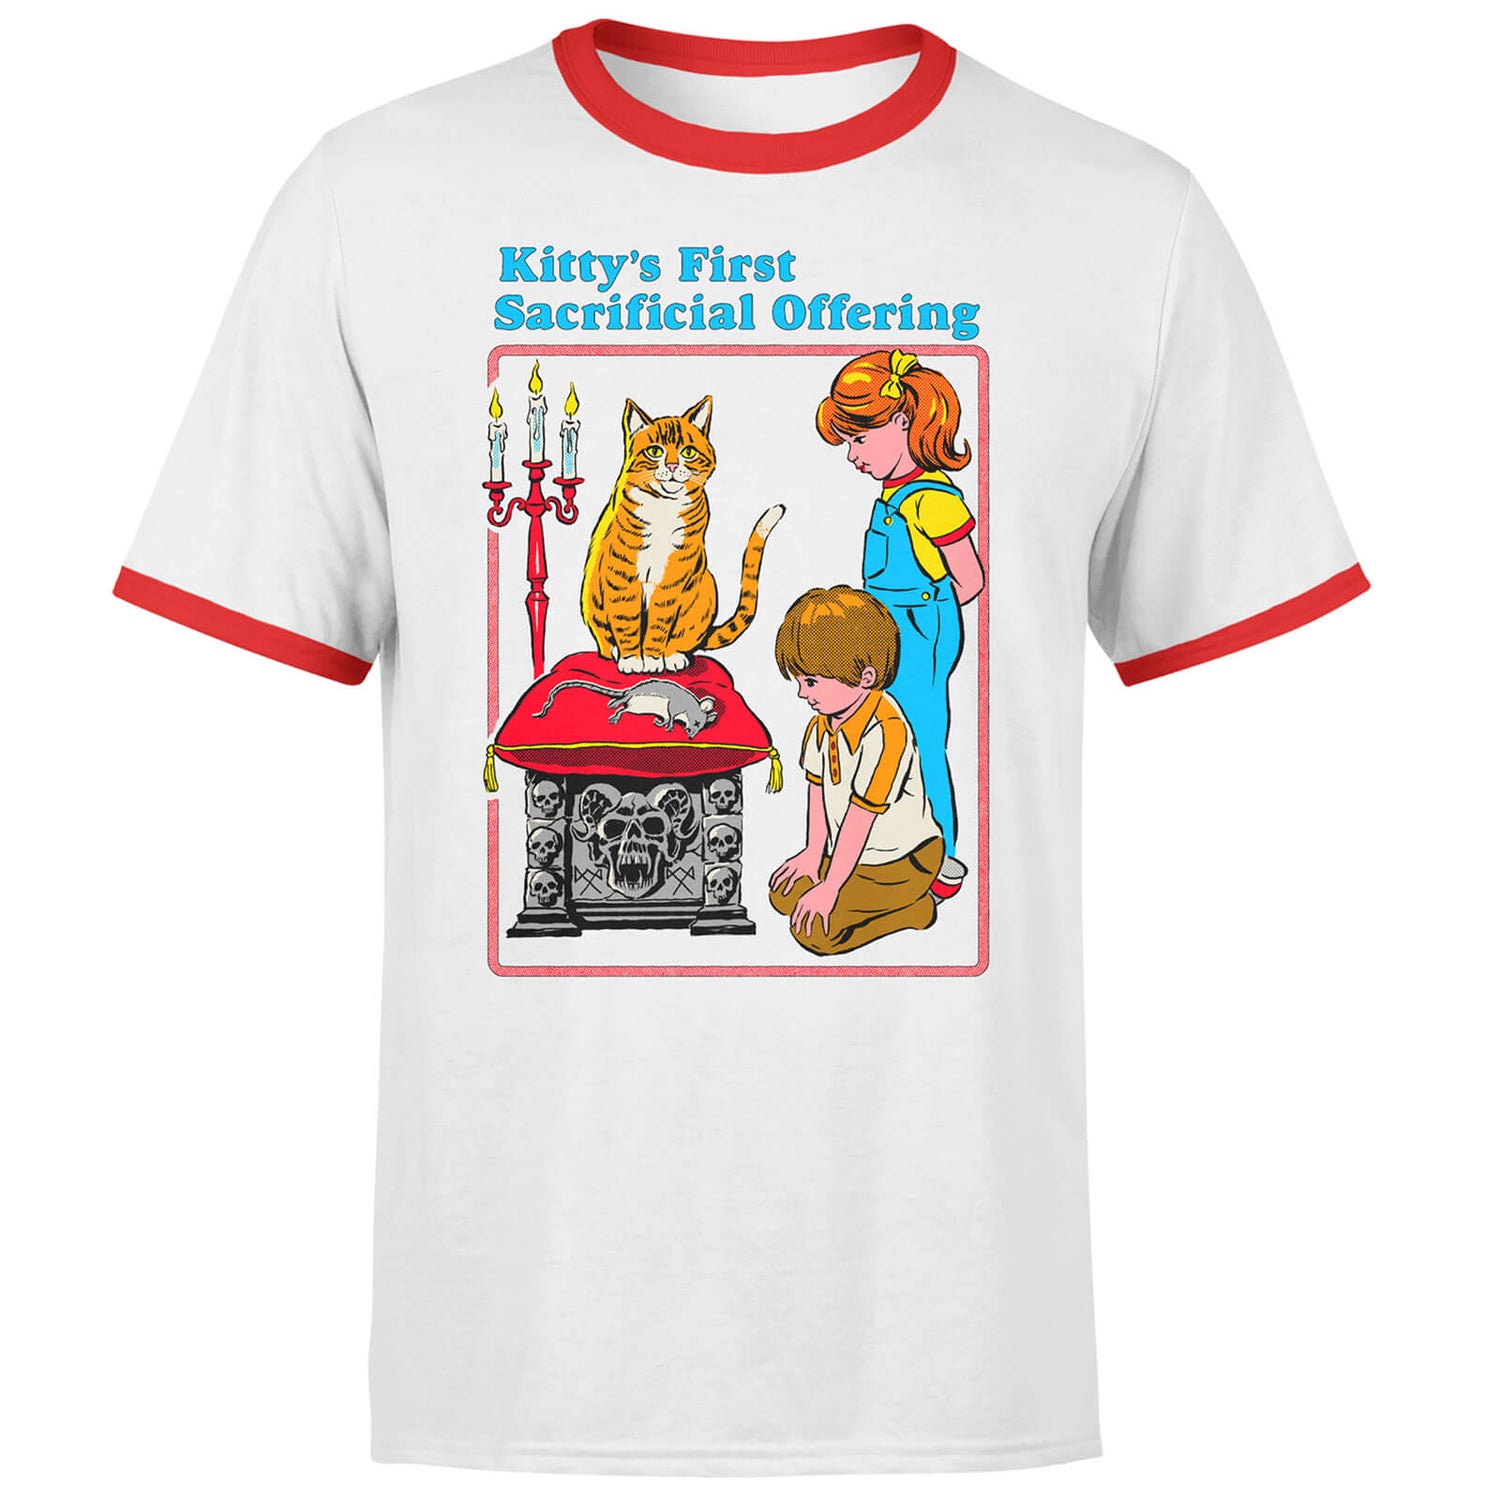 Kitty's First Sacrificial Offering Men's Ringer T-Shirt - White/Red